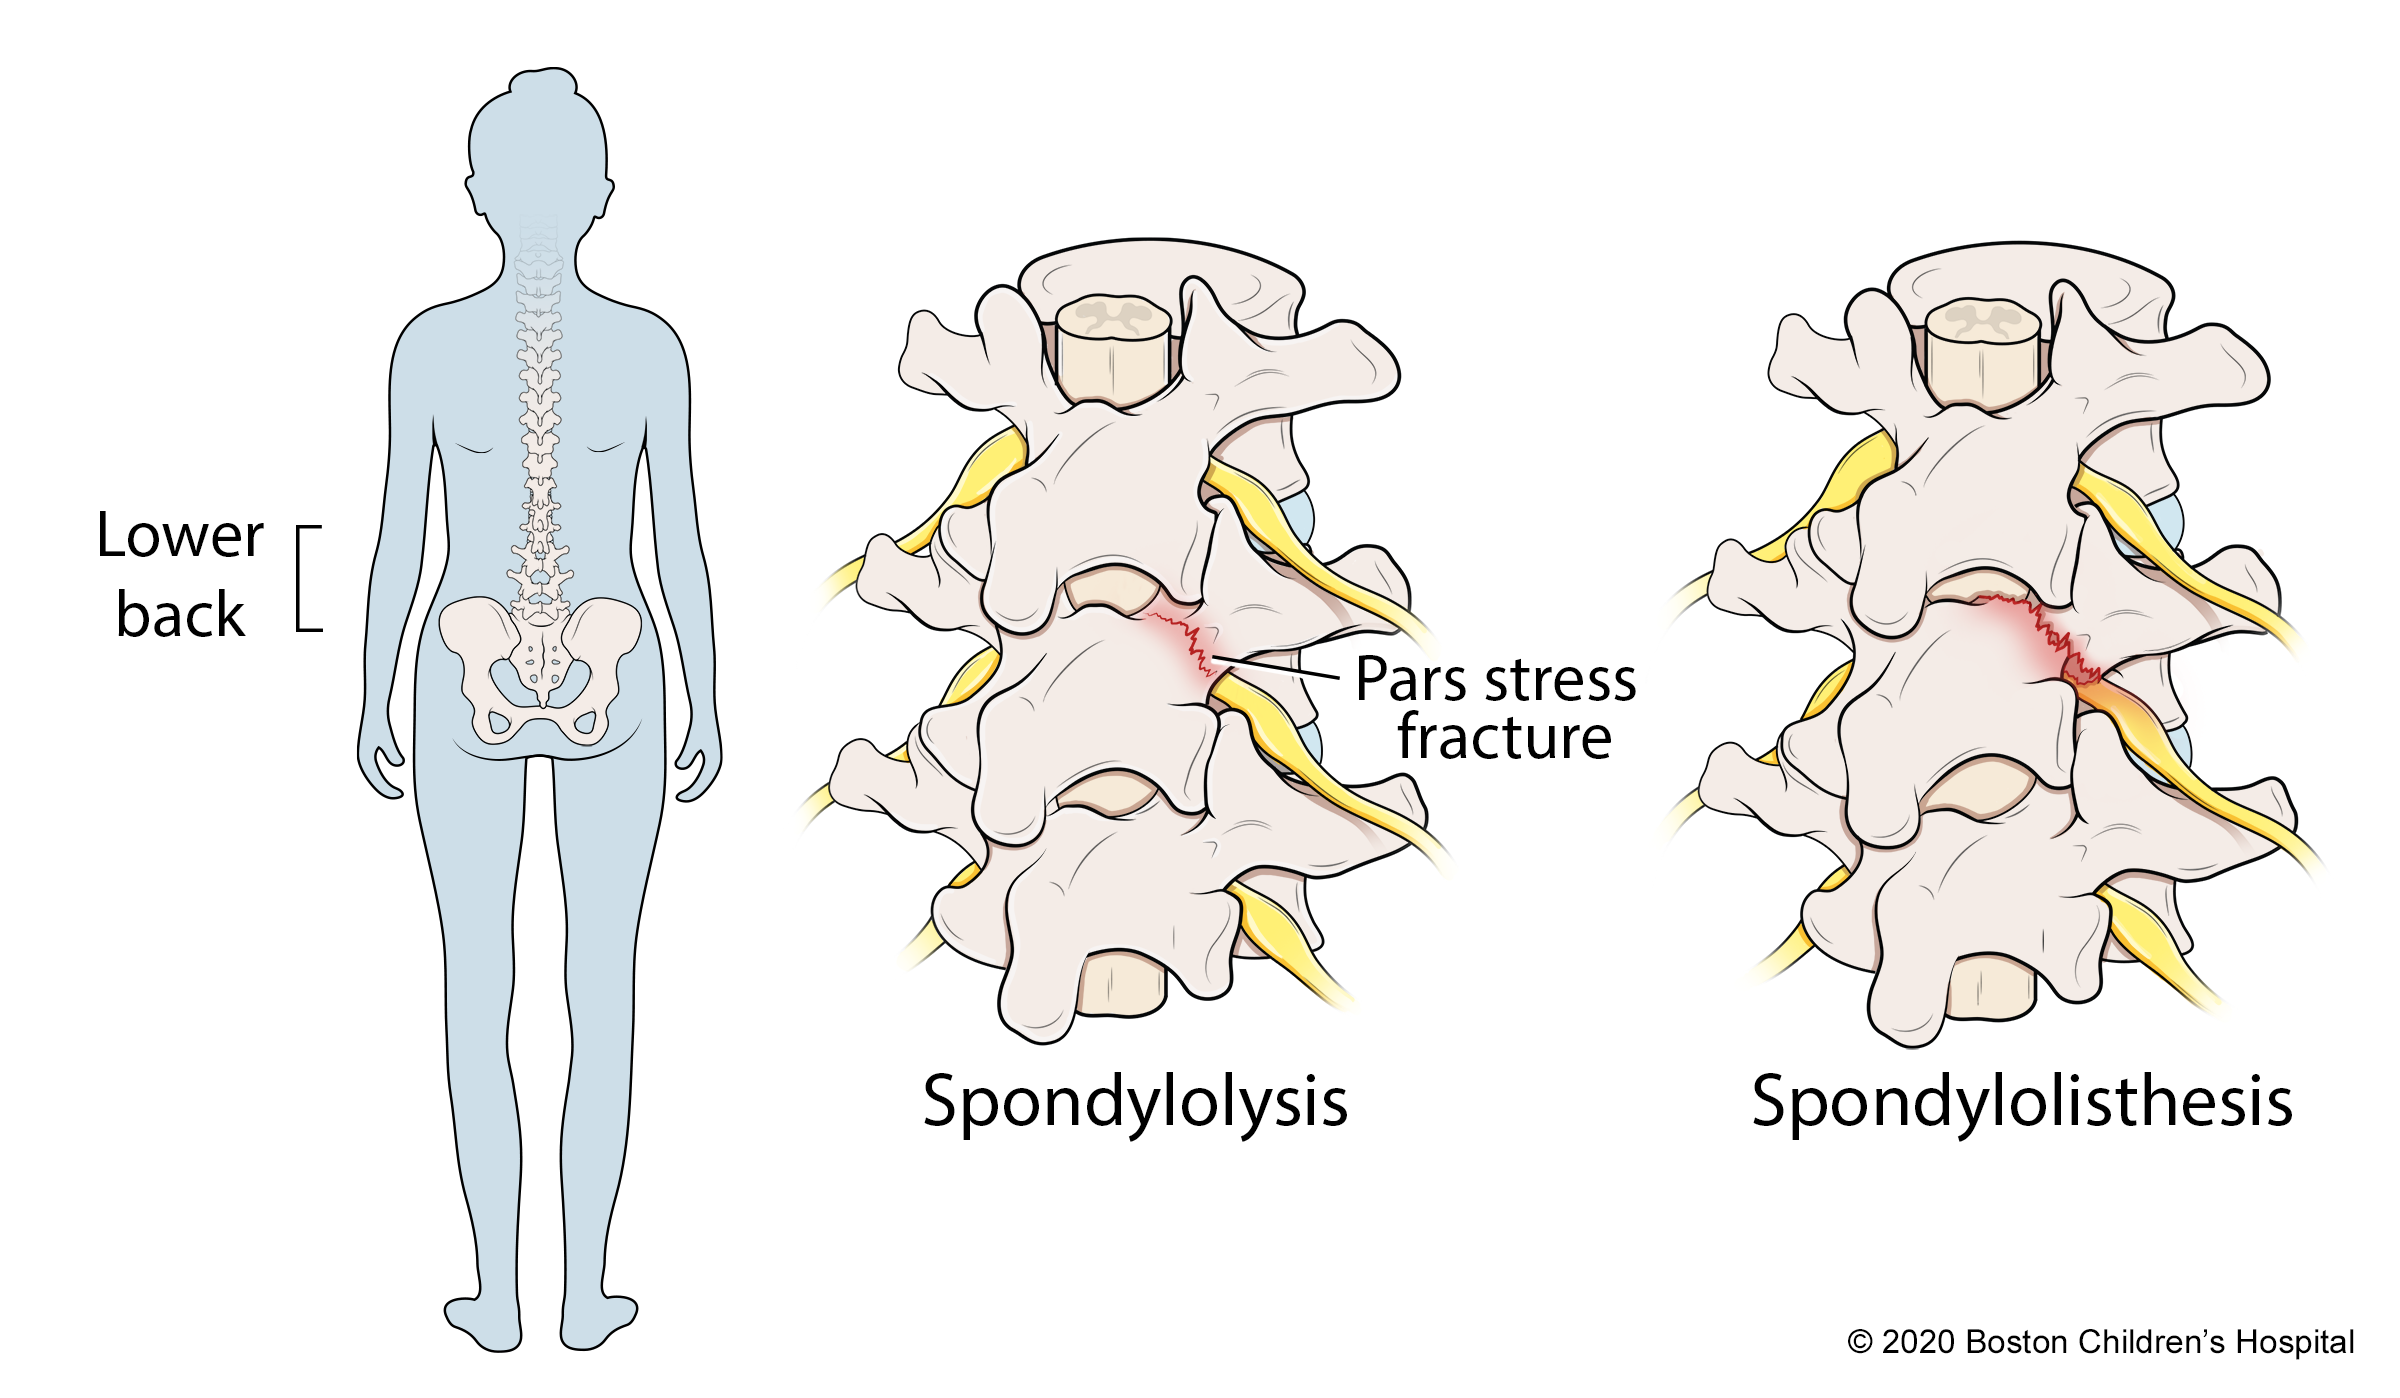 Spondylolysis can progress to spondylolisthesis, as shown in this image.